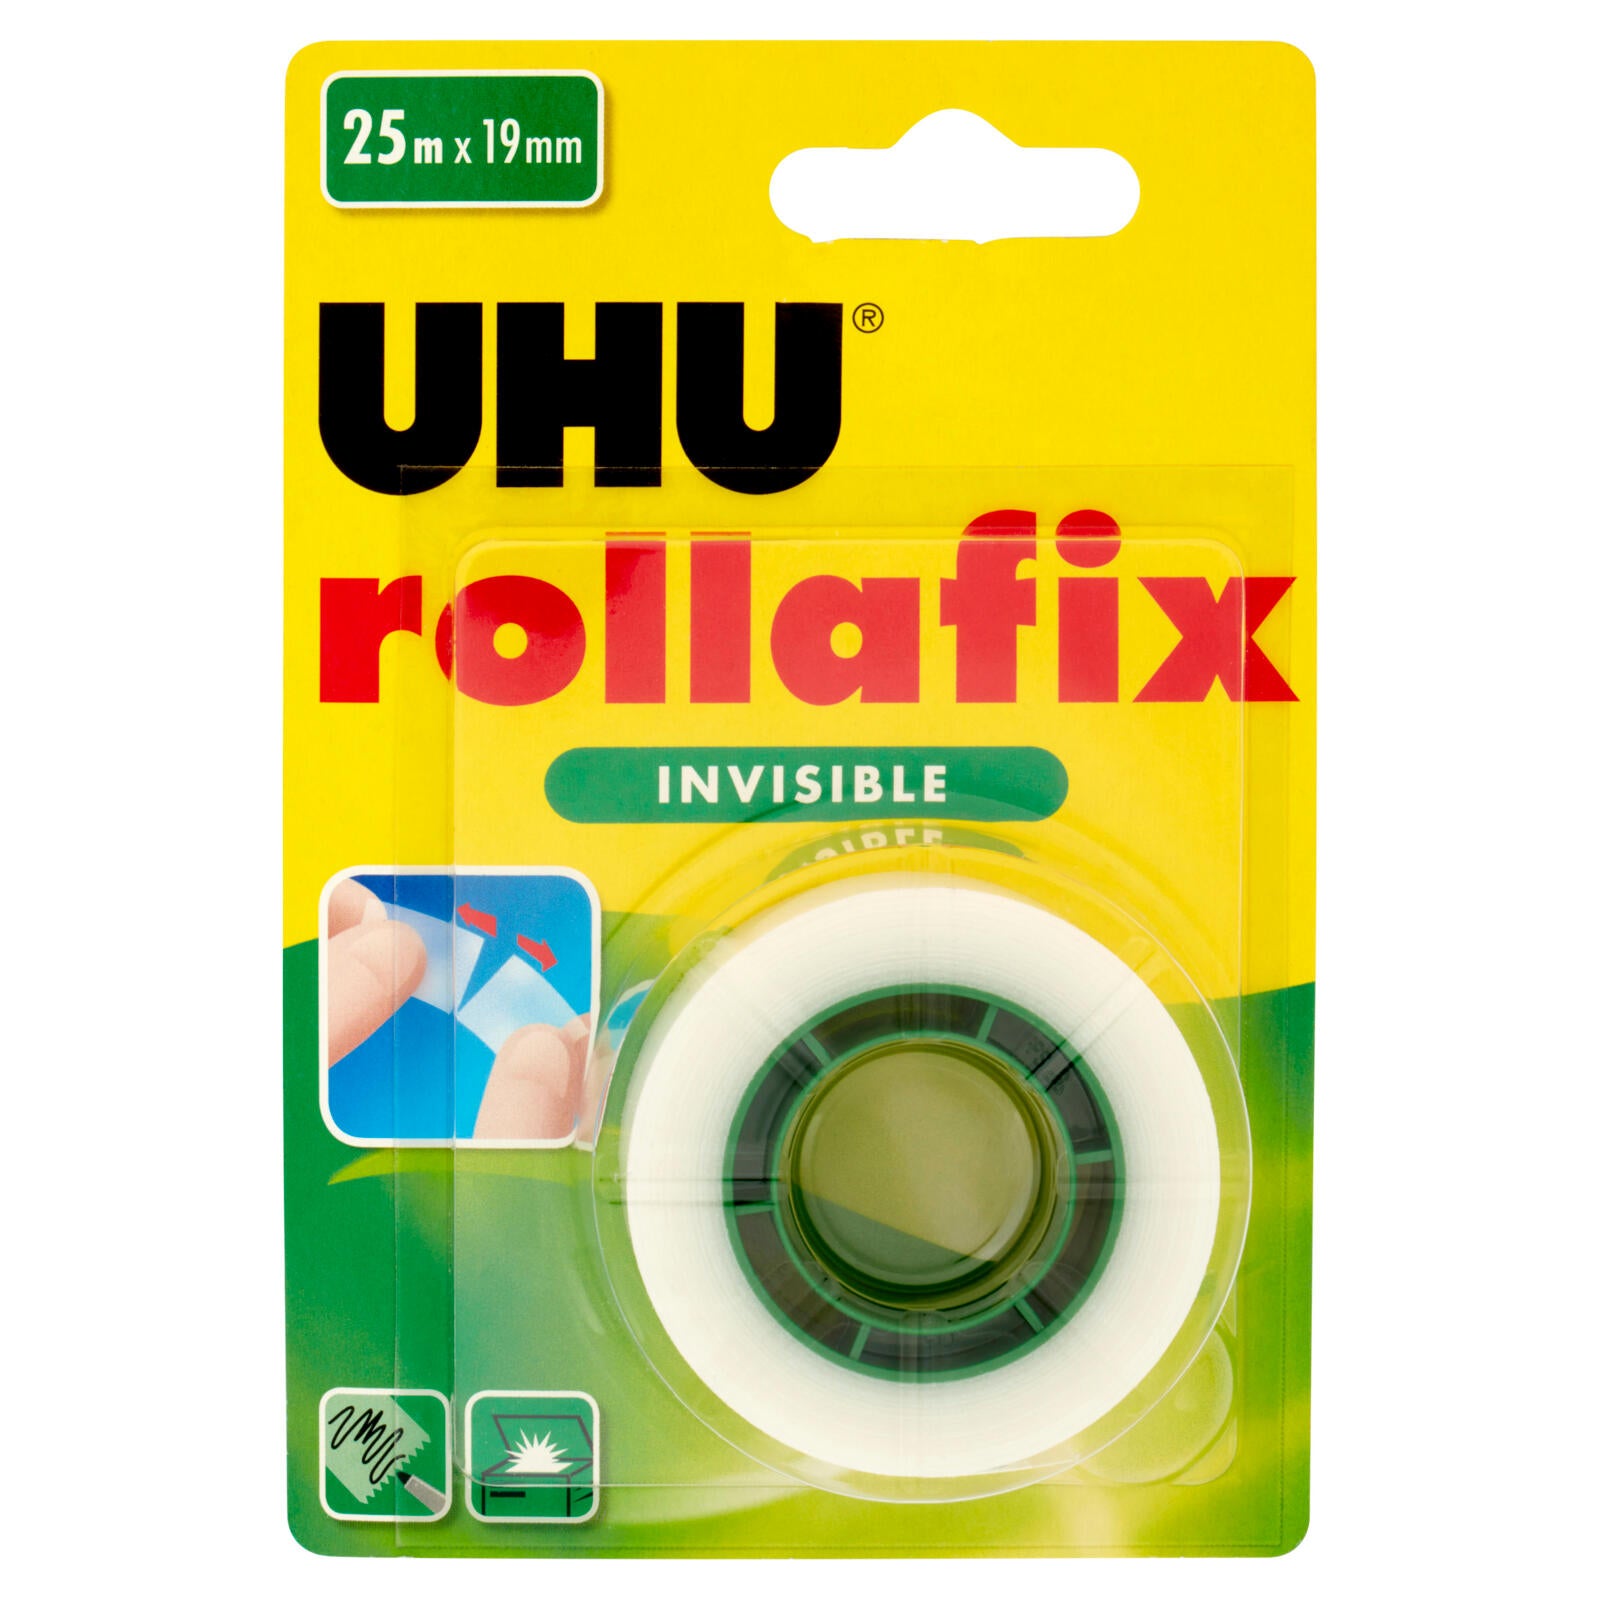 UHU rollafix Invisible 25m x 19mm